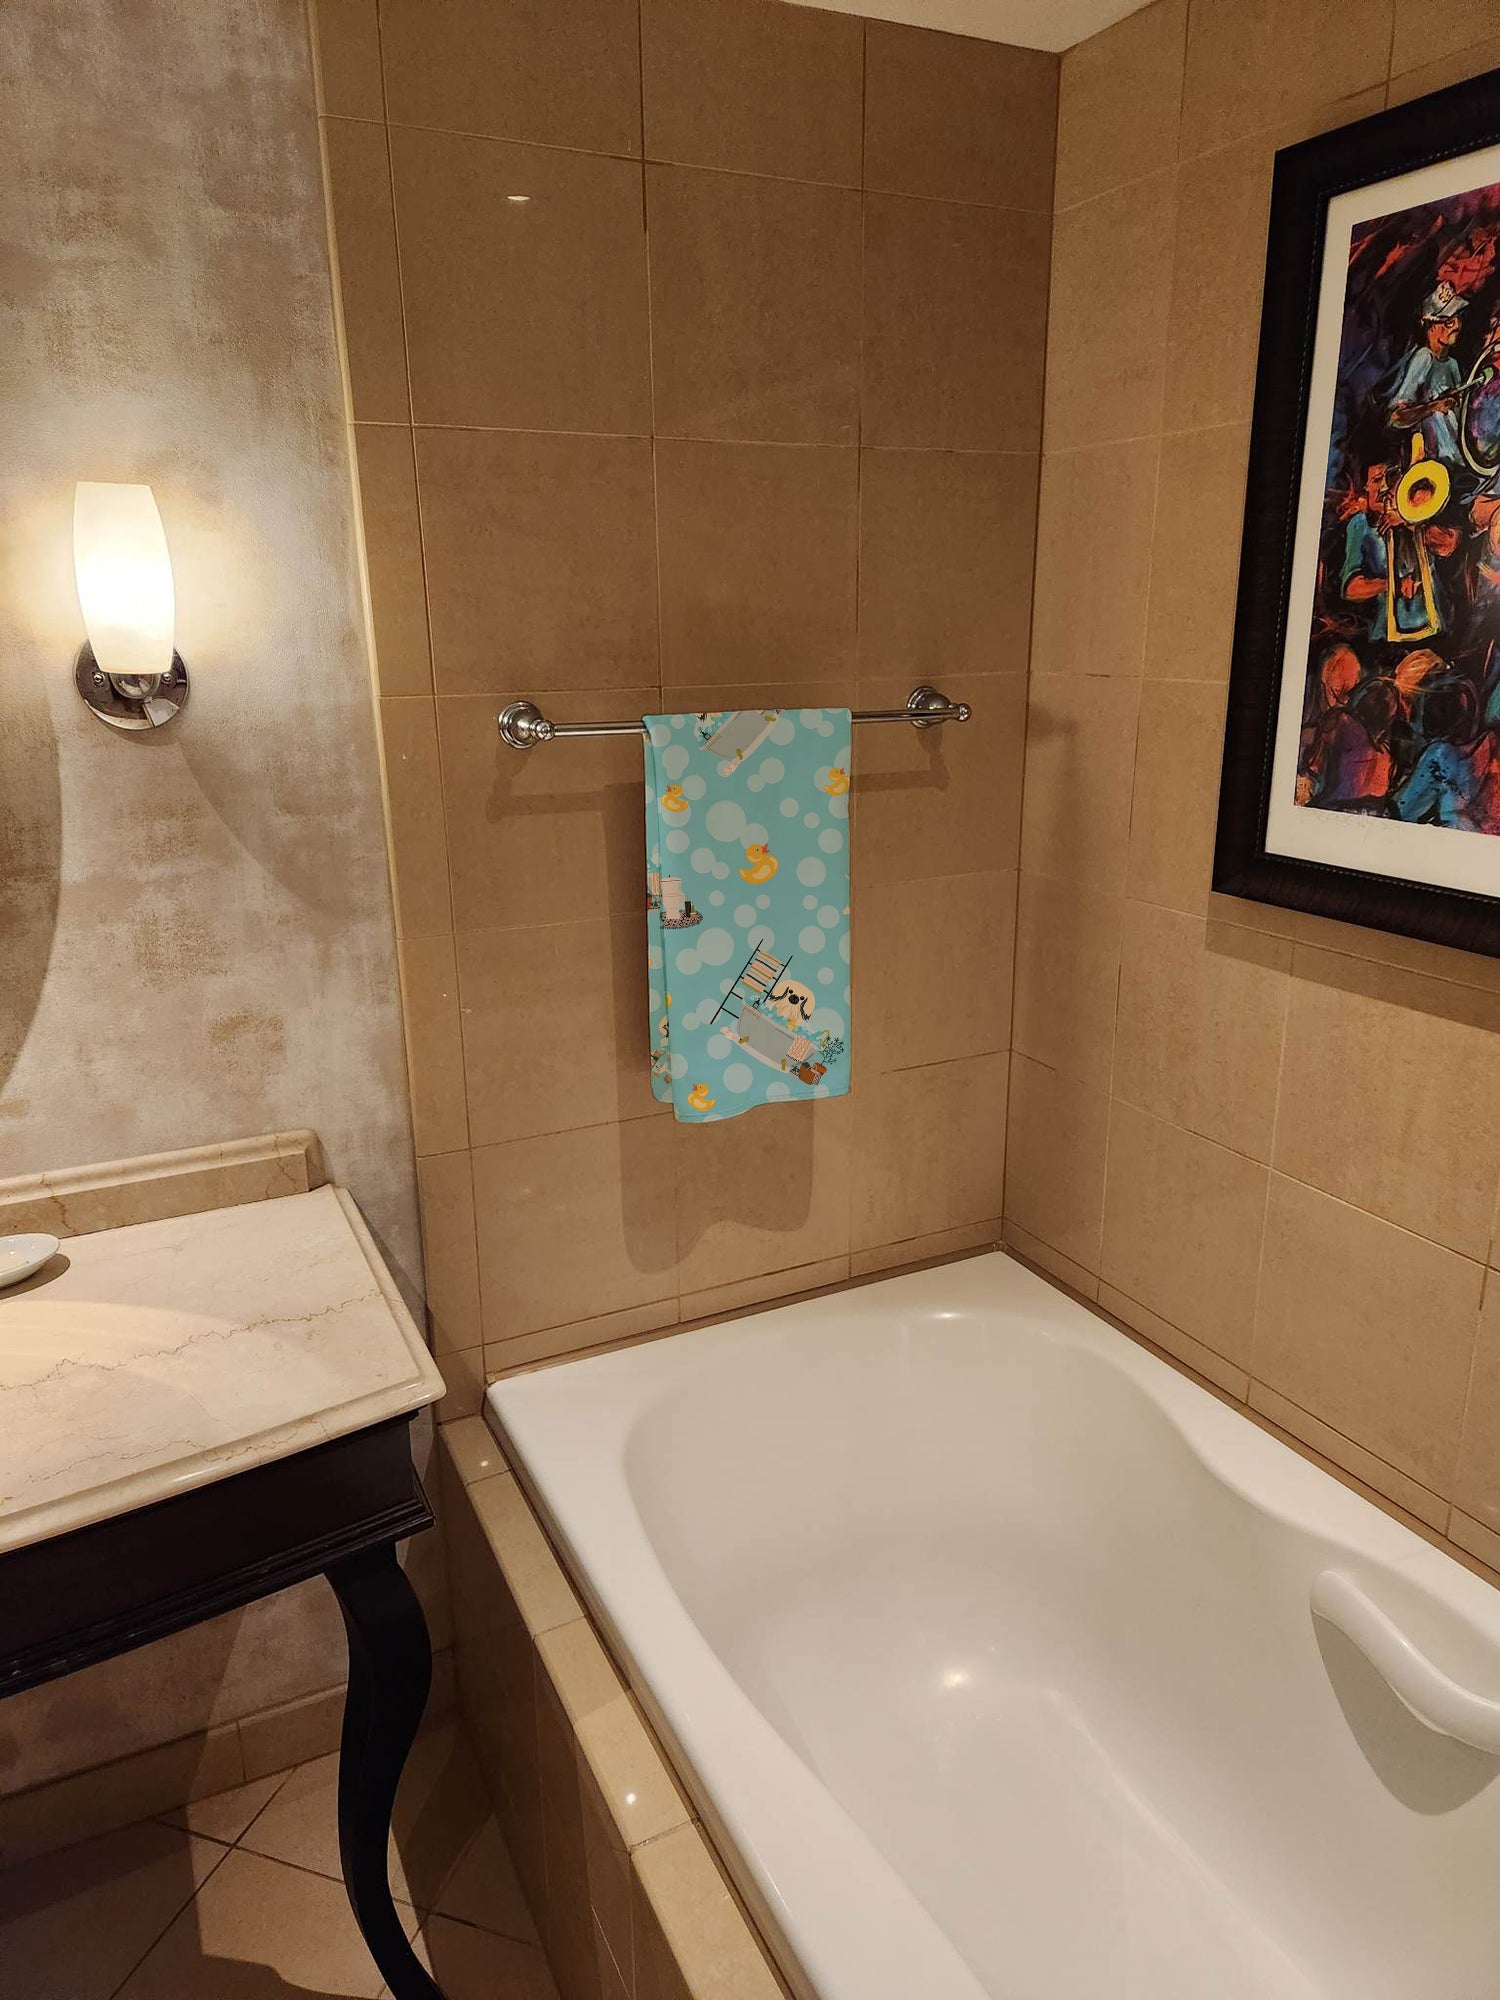 Buy this Cream Pekingese in Bathtub Bath Towel Large